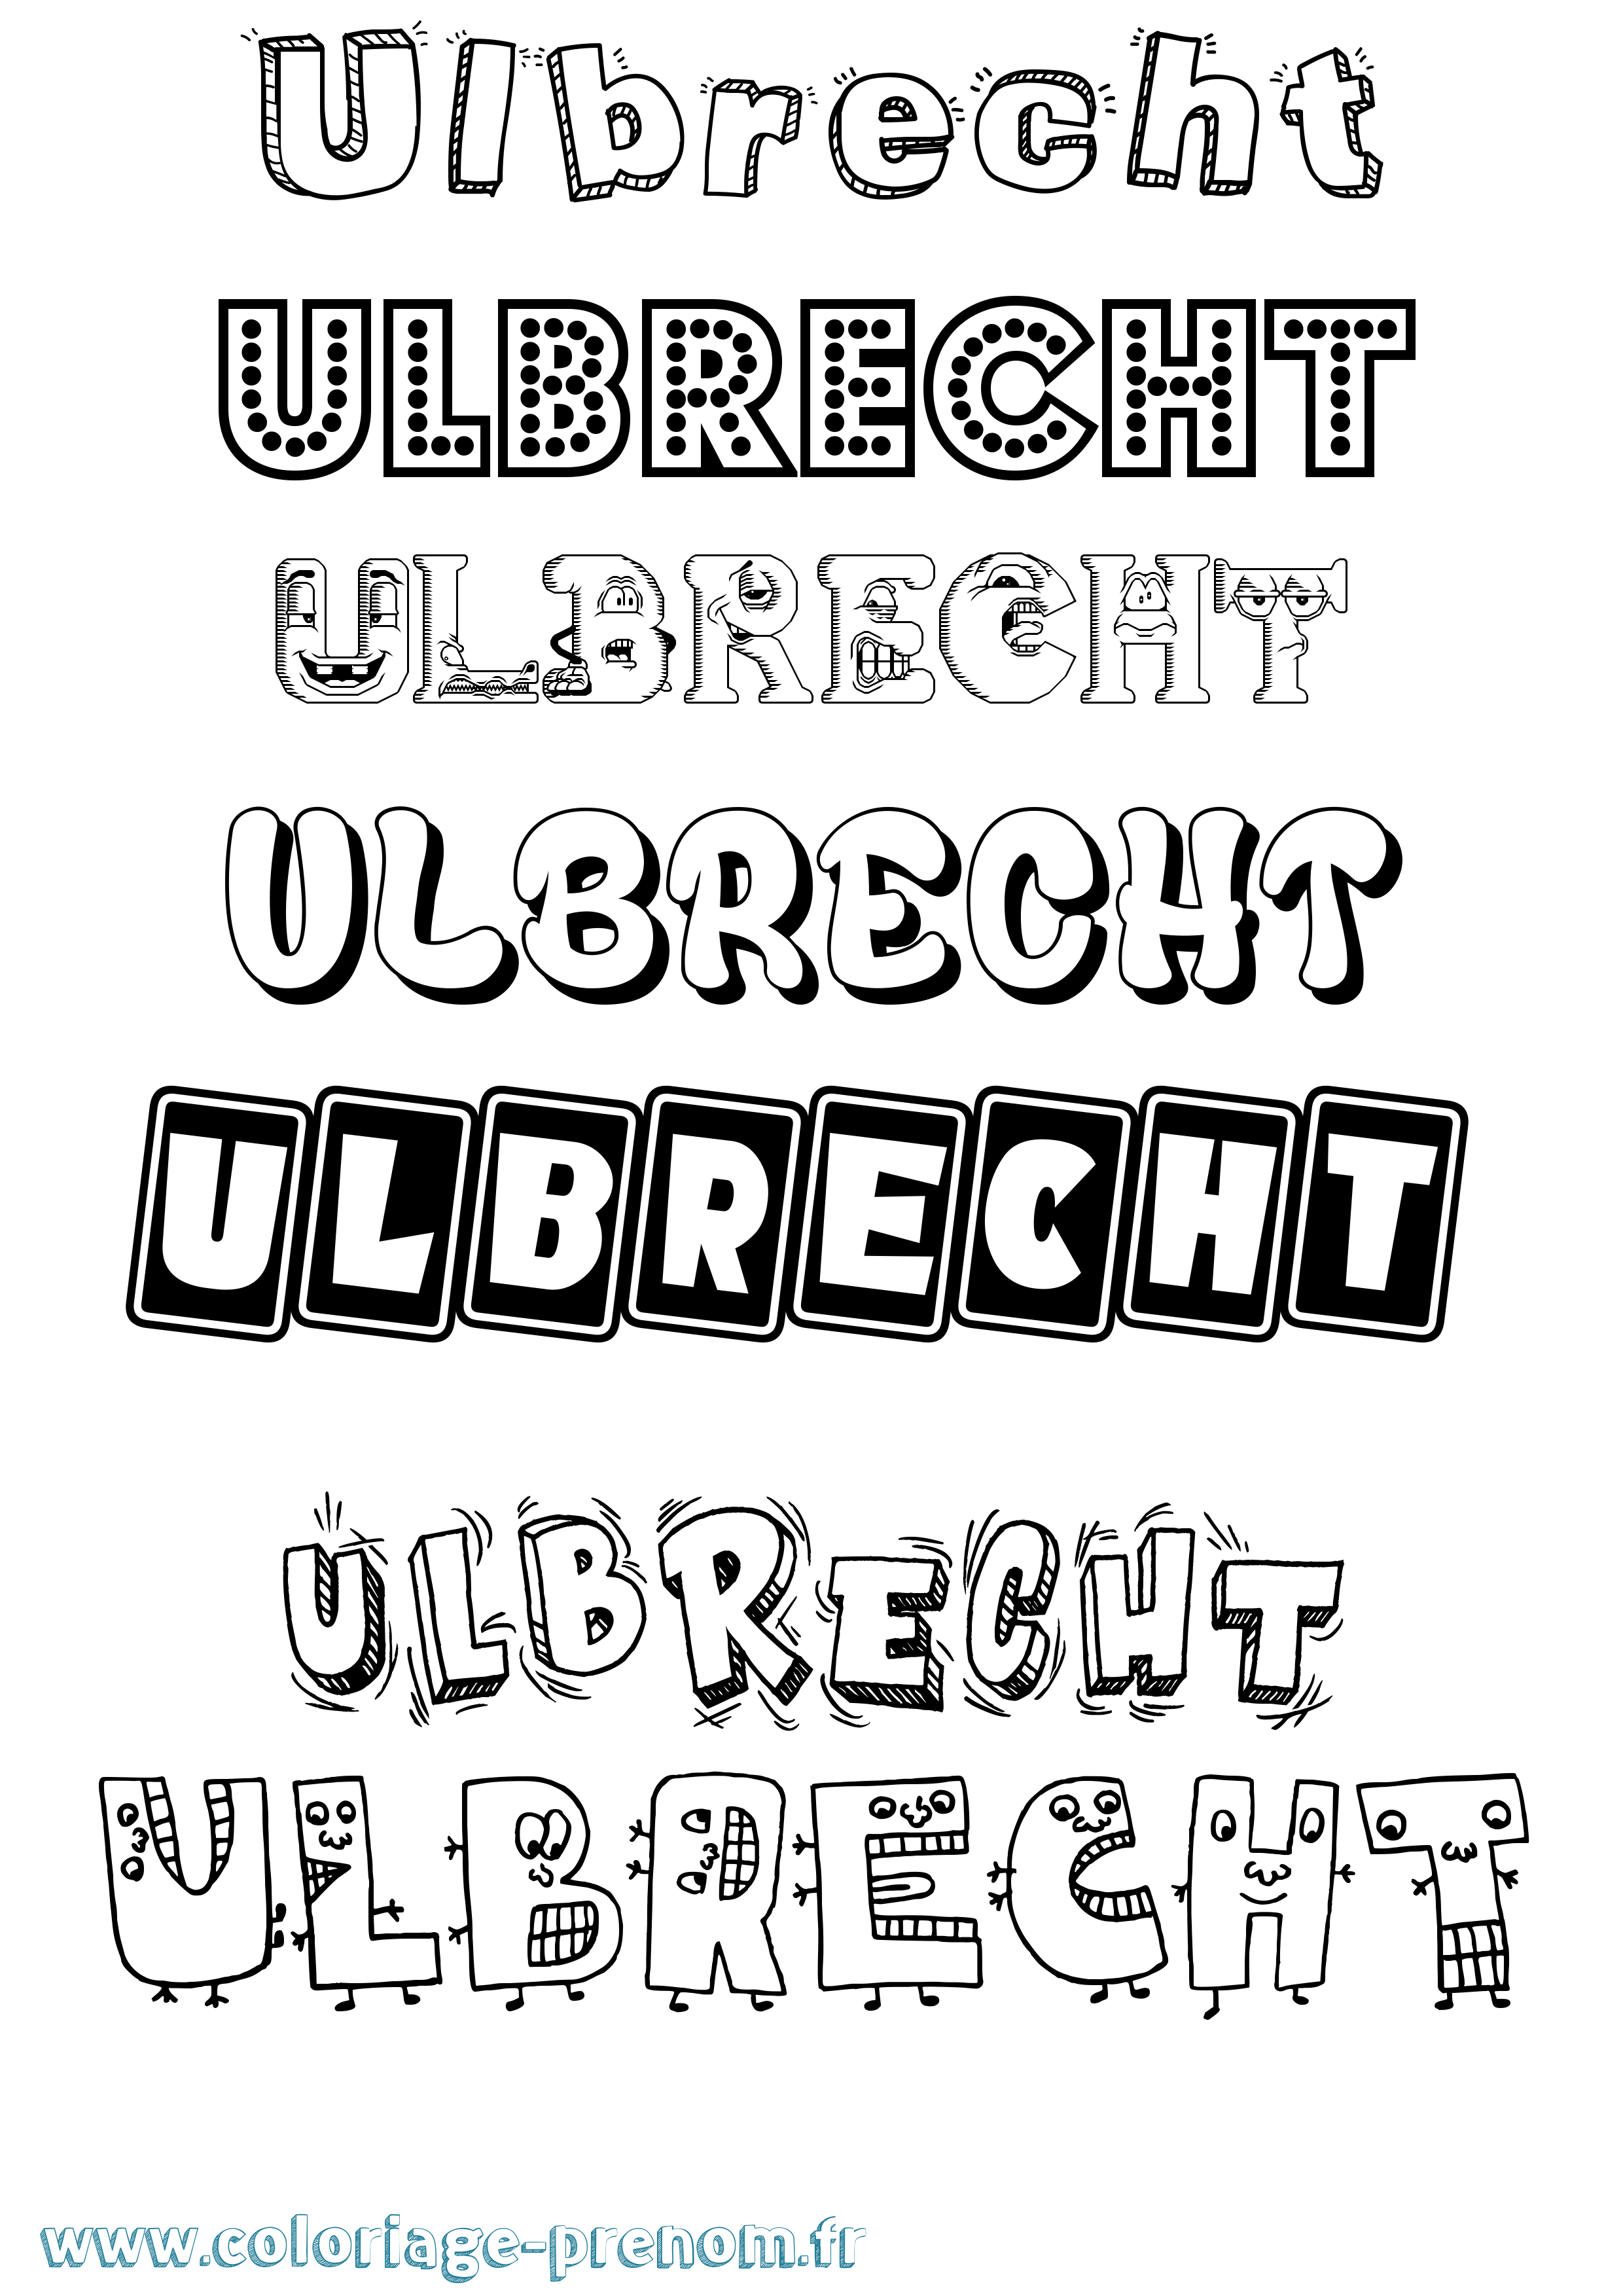 Coloriage prénom Ulbrecht Fun